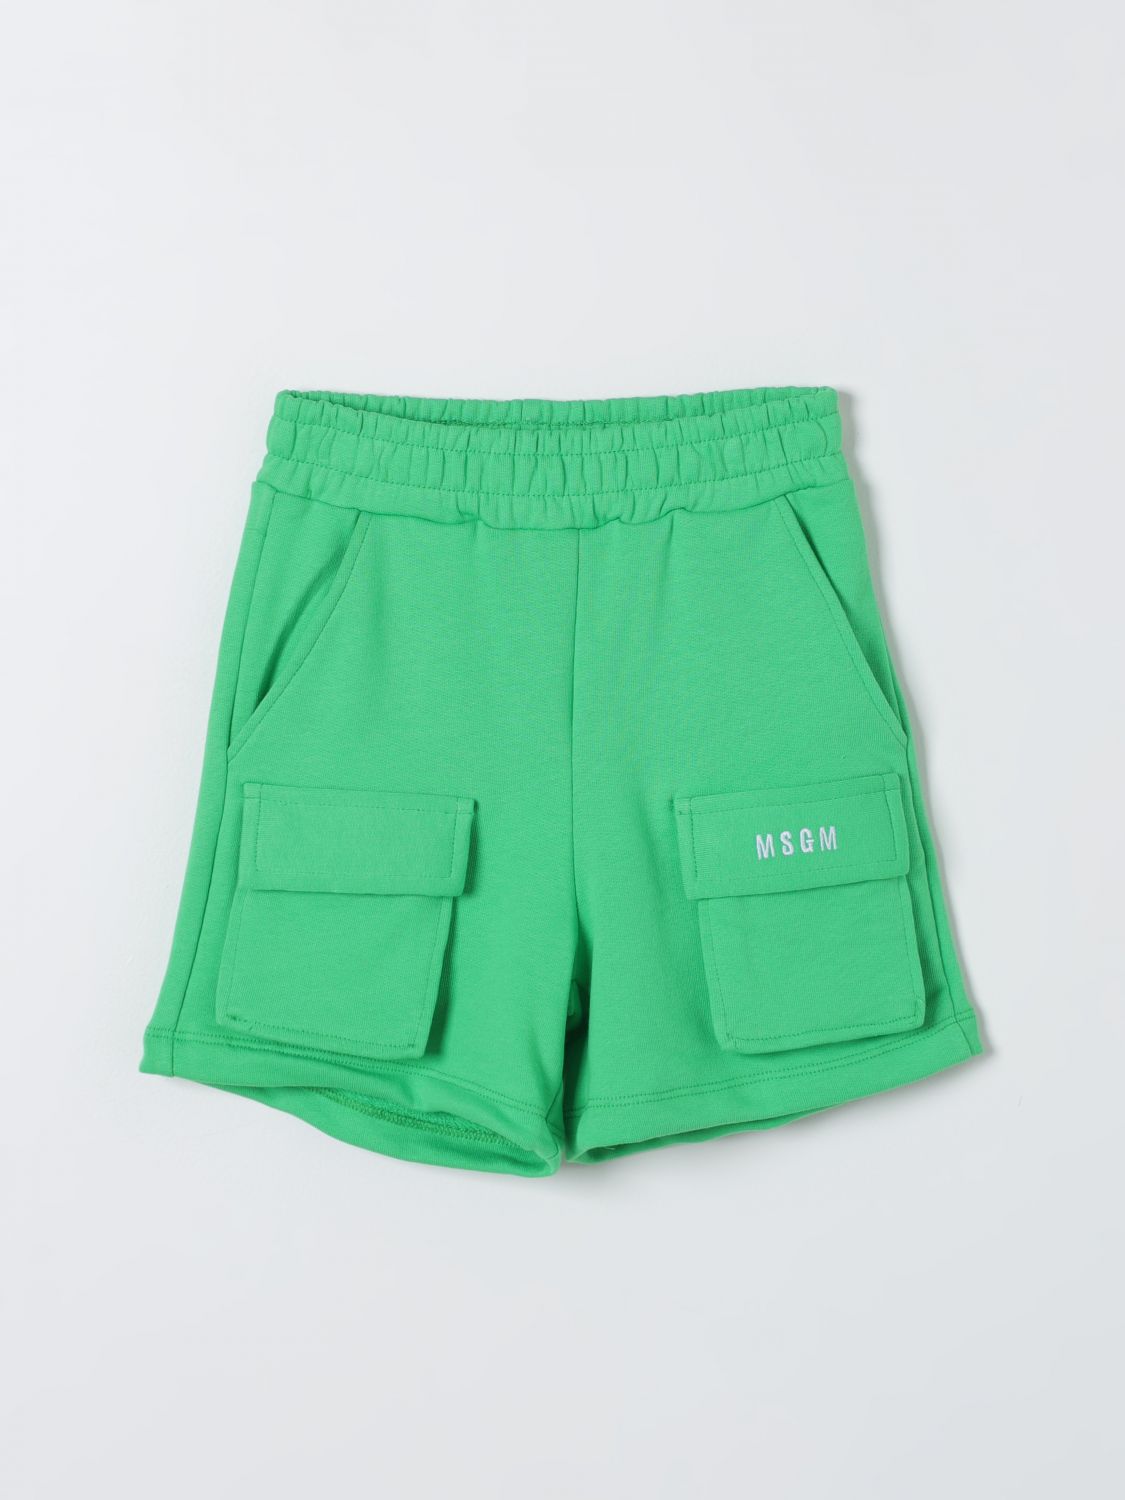 Msgm Babies' Shorts  Kids Kids Colour Green